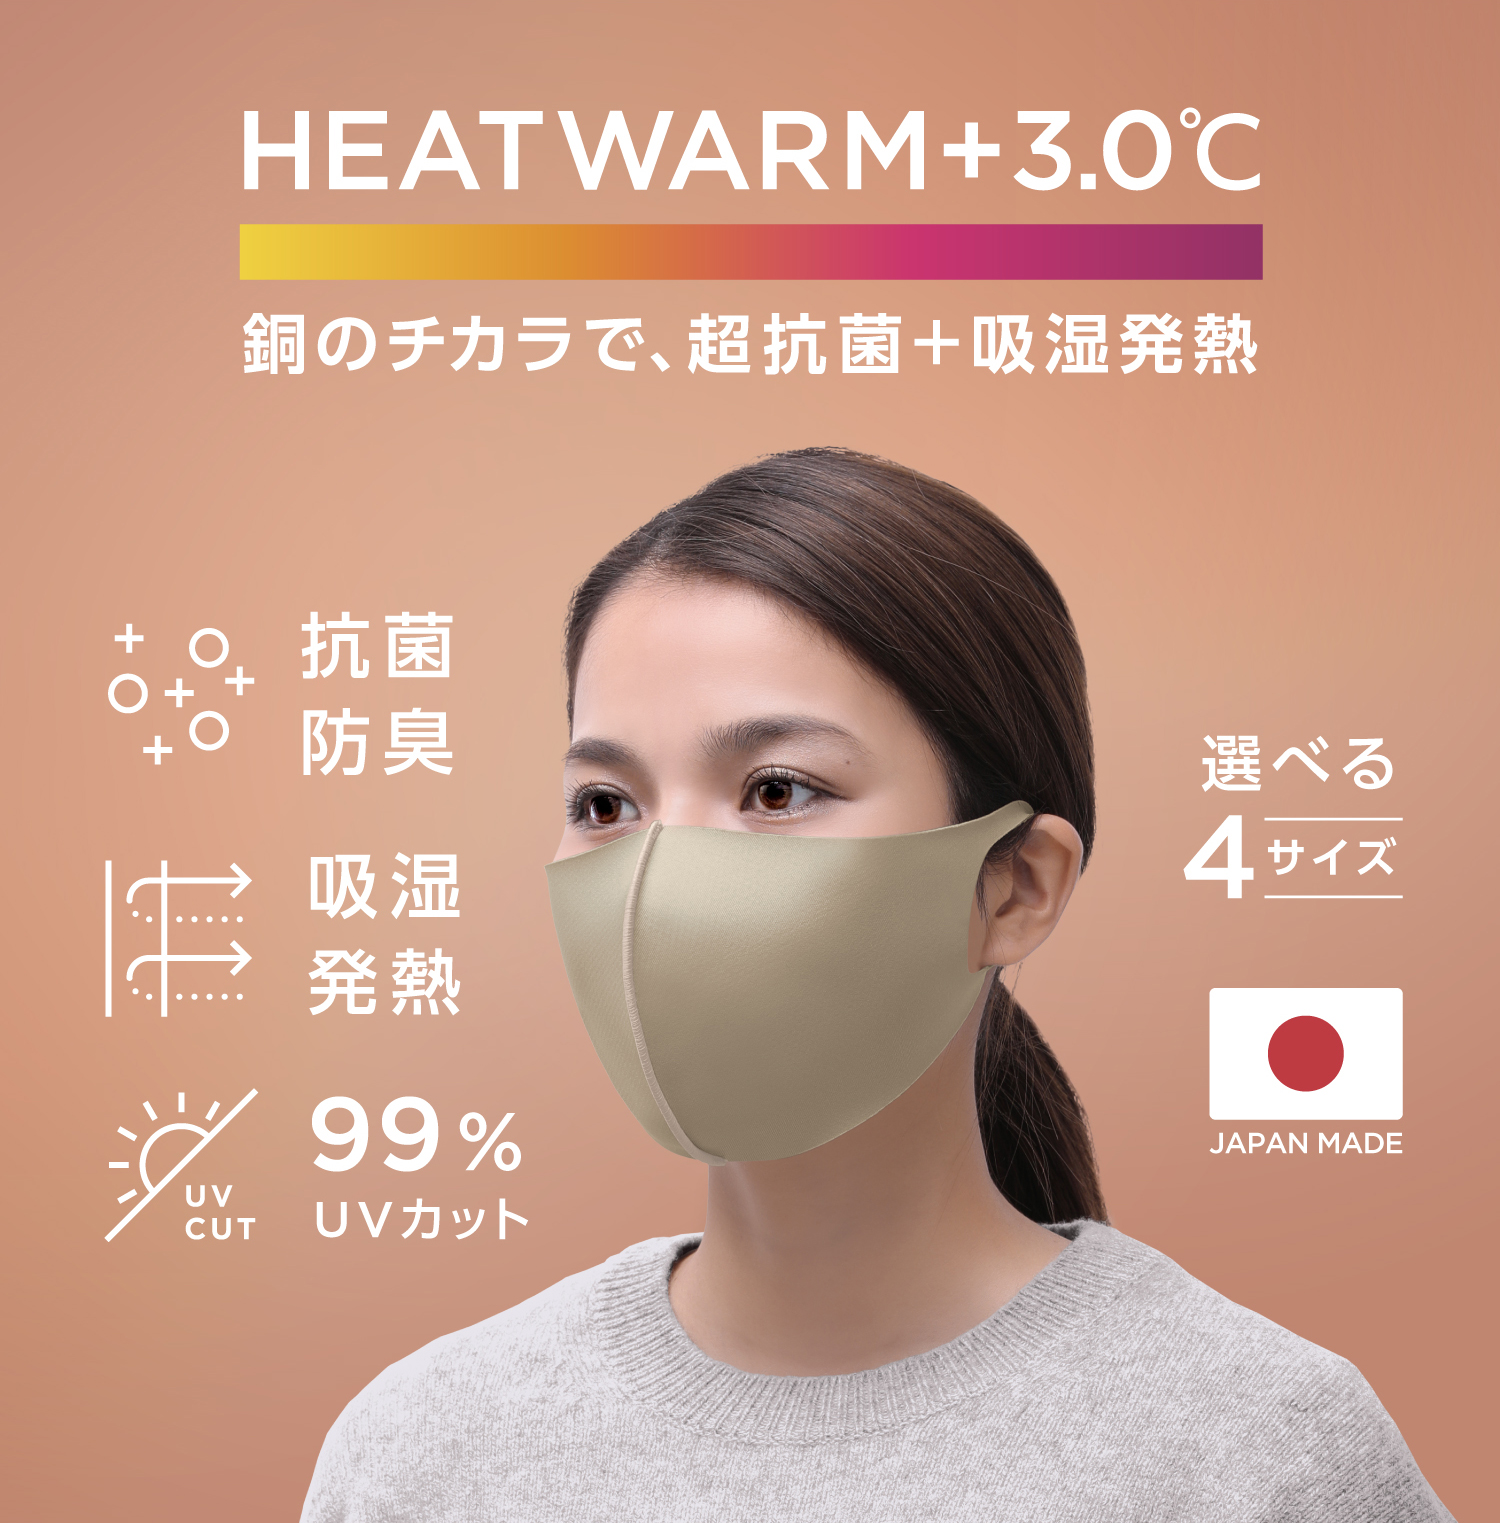 ＳＮＳで話題】寒い季節に嬉しい吸湿発熱マスク「HeatWarm ＋3.0℃」を追加販売｜株式会社バイナルのプレスリリース